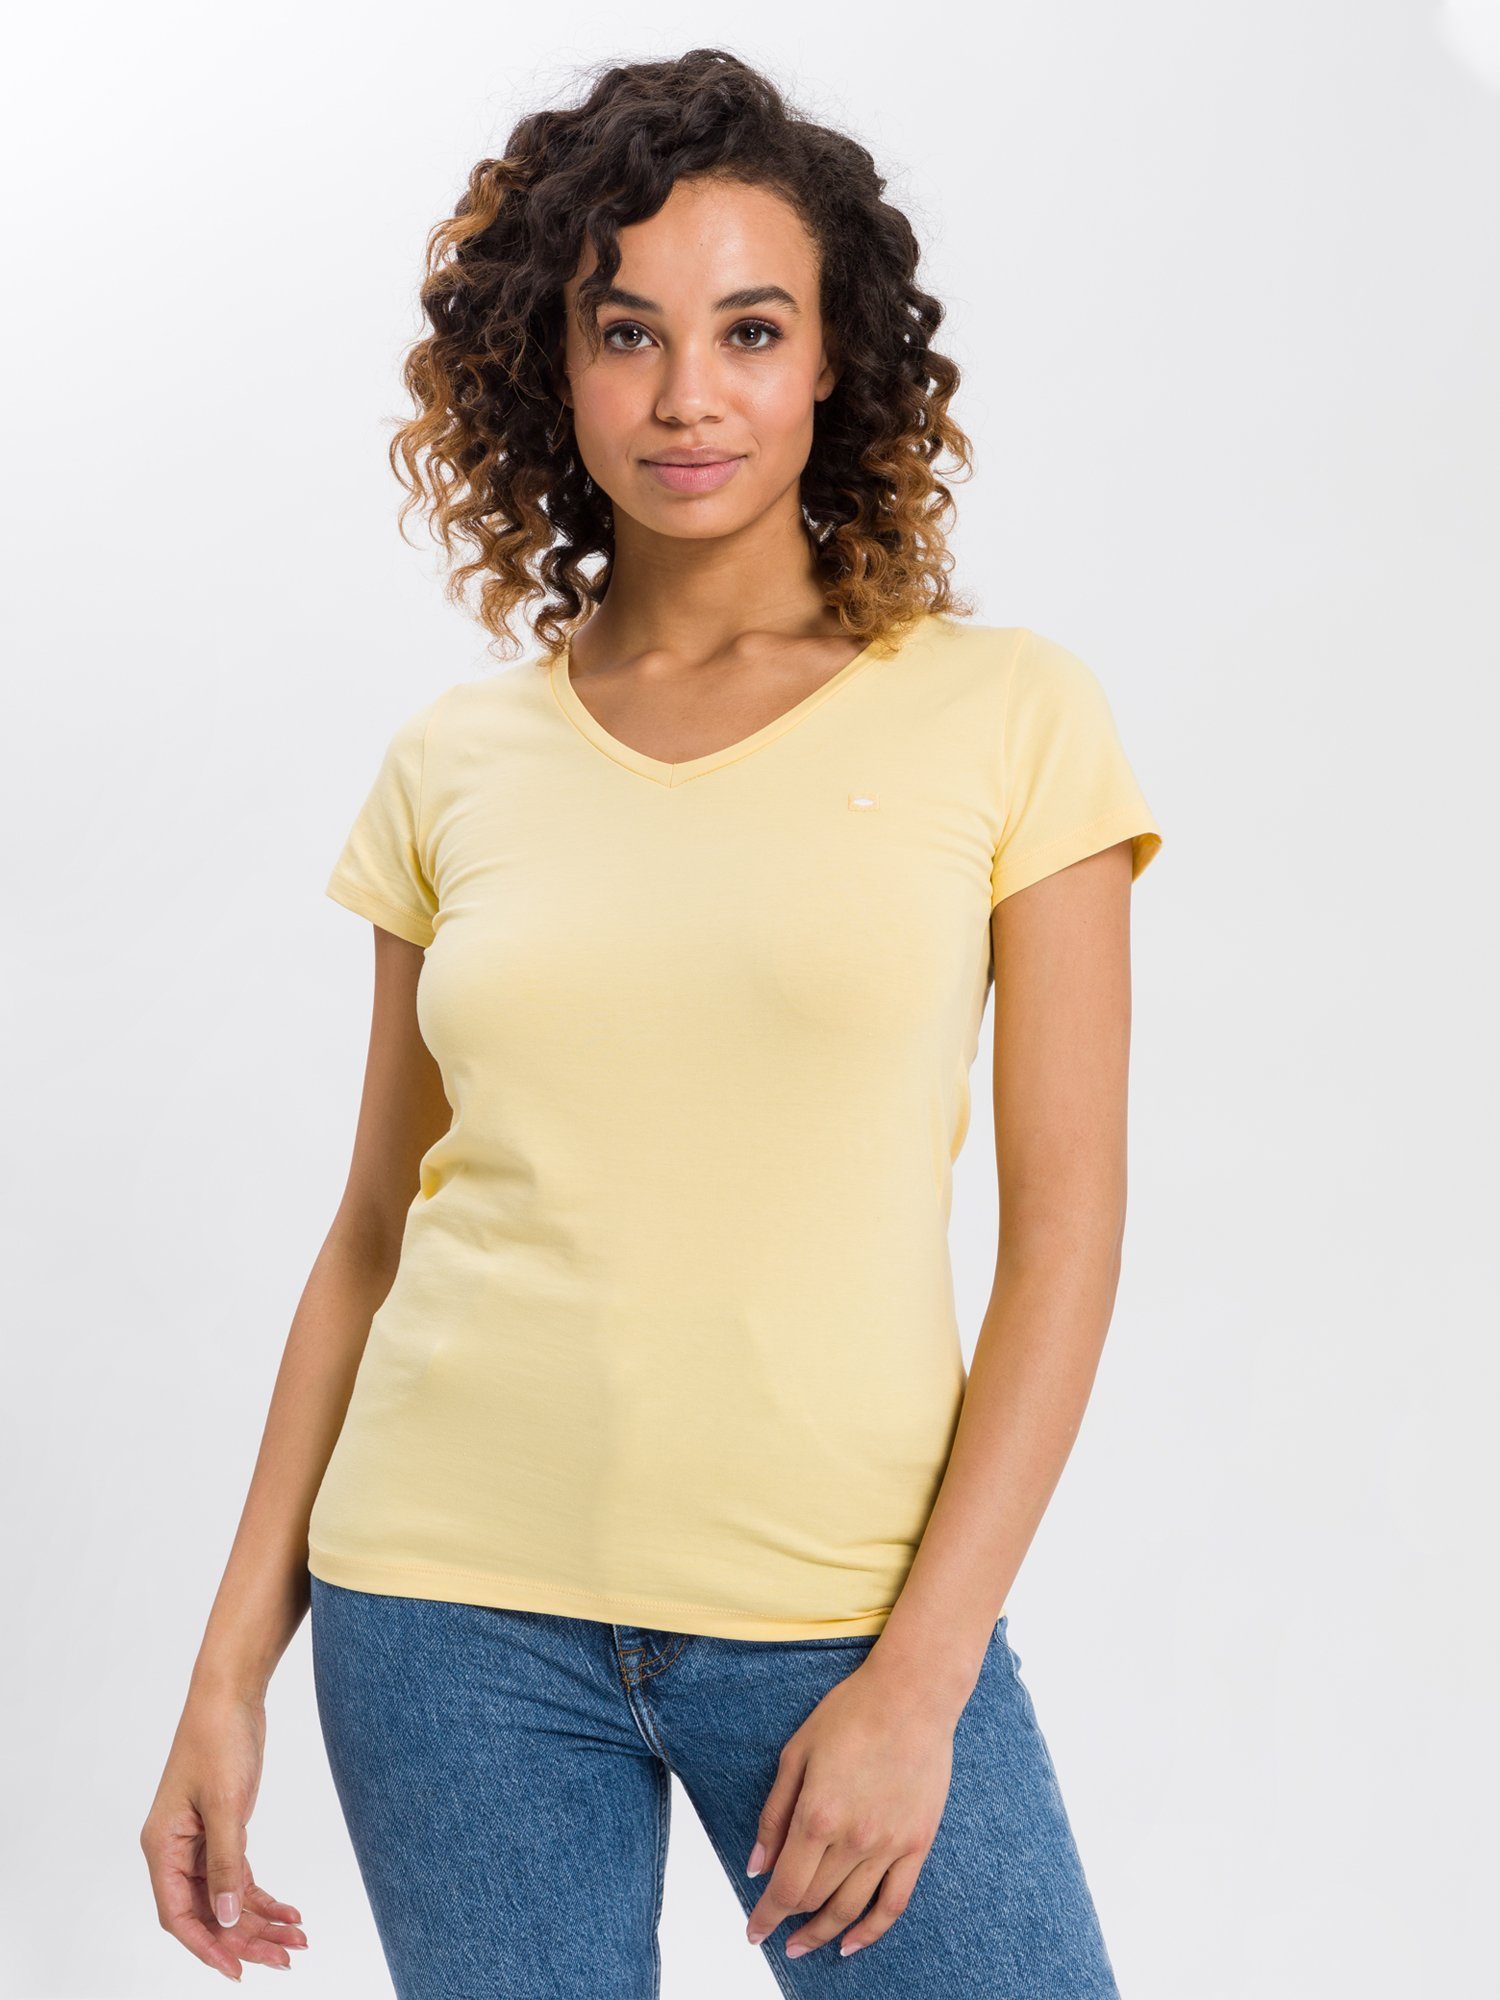 Cross Jeans® T-Shirt 55152 online kaufen | OTTO